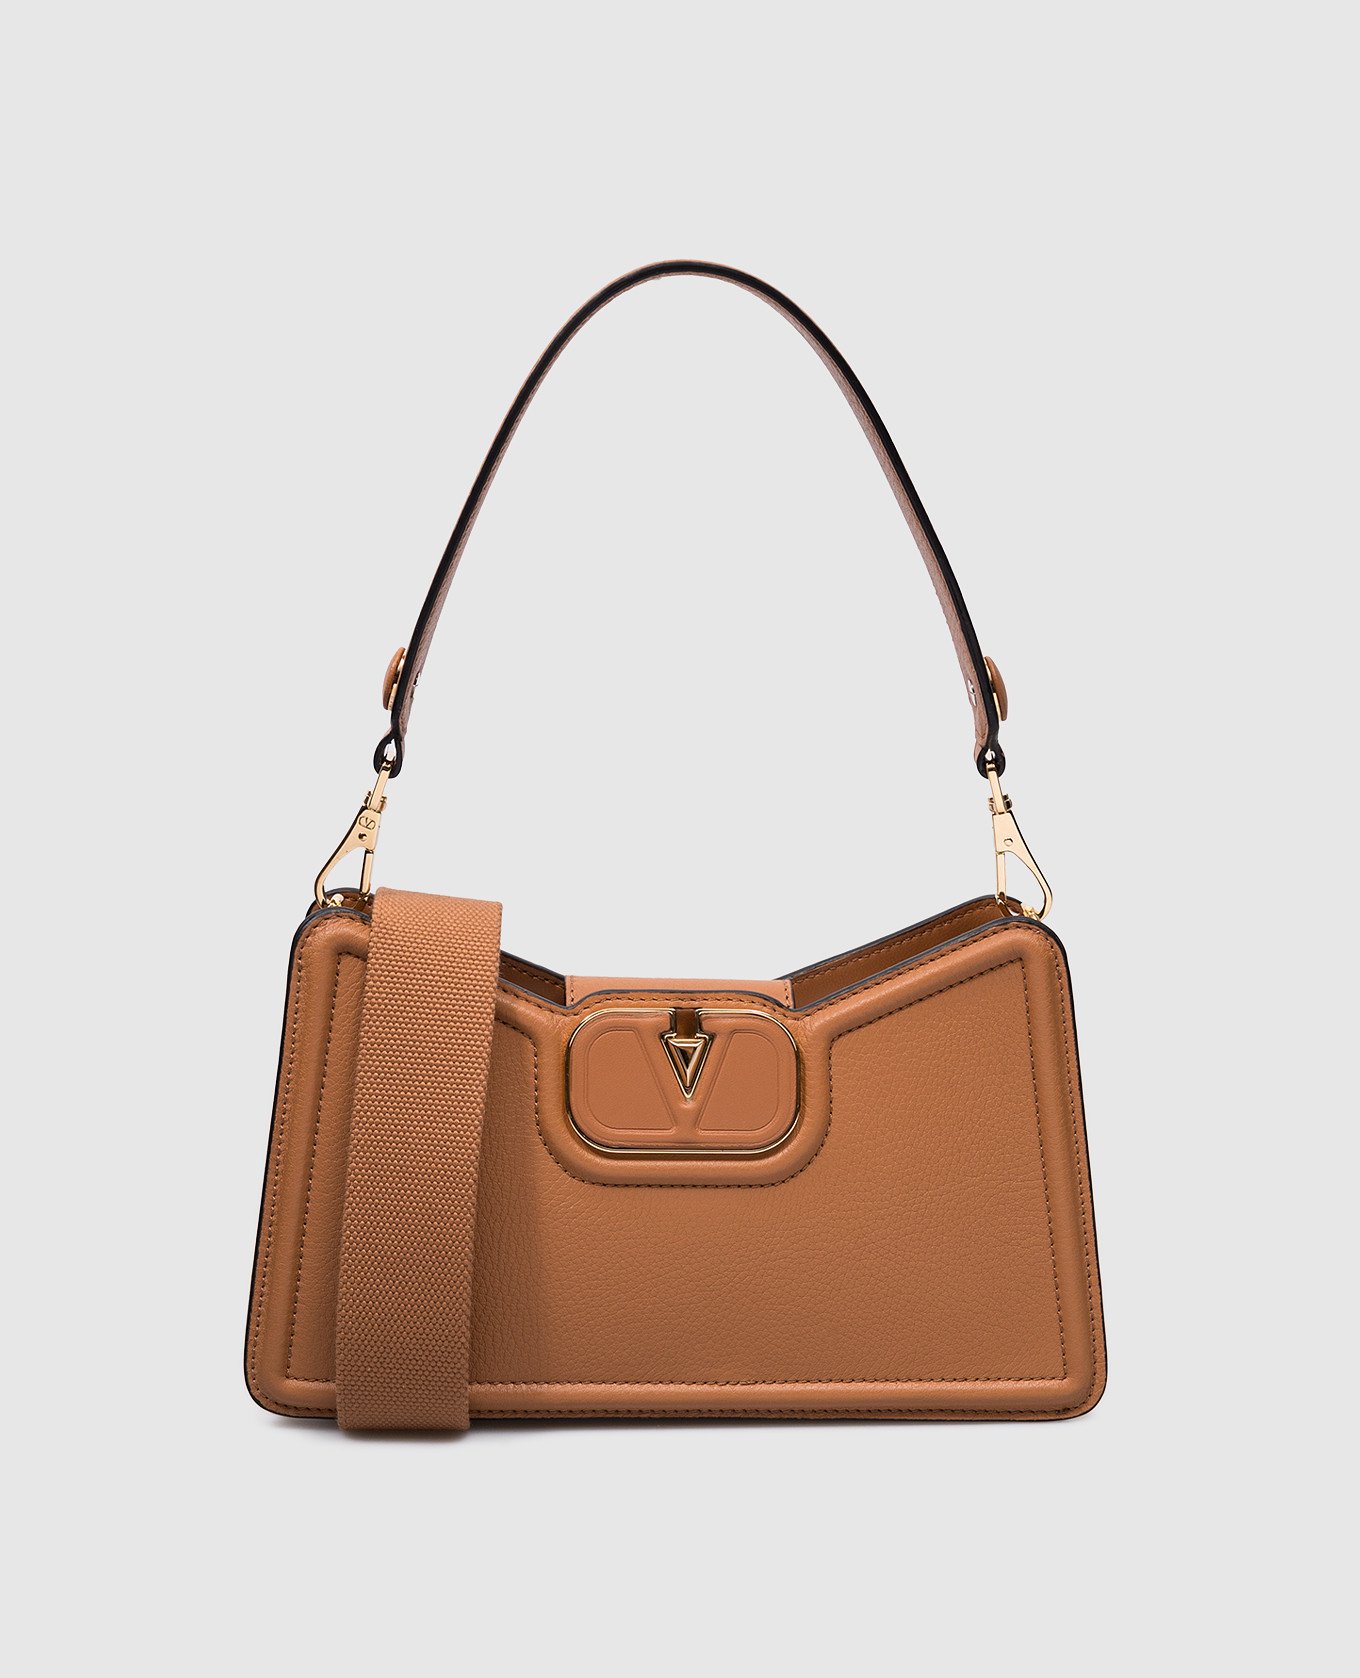 VLOGO brown leather bag